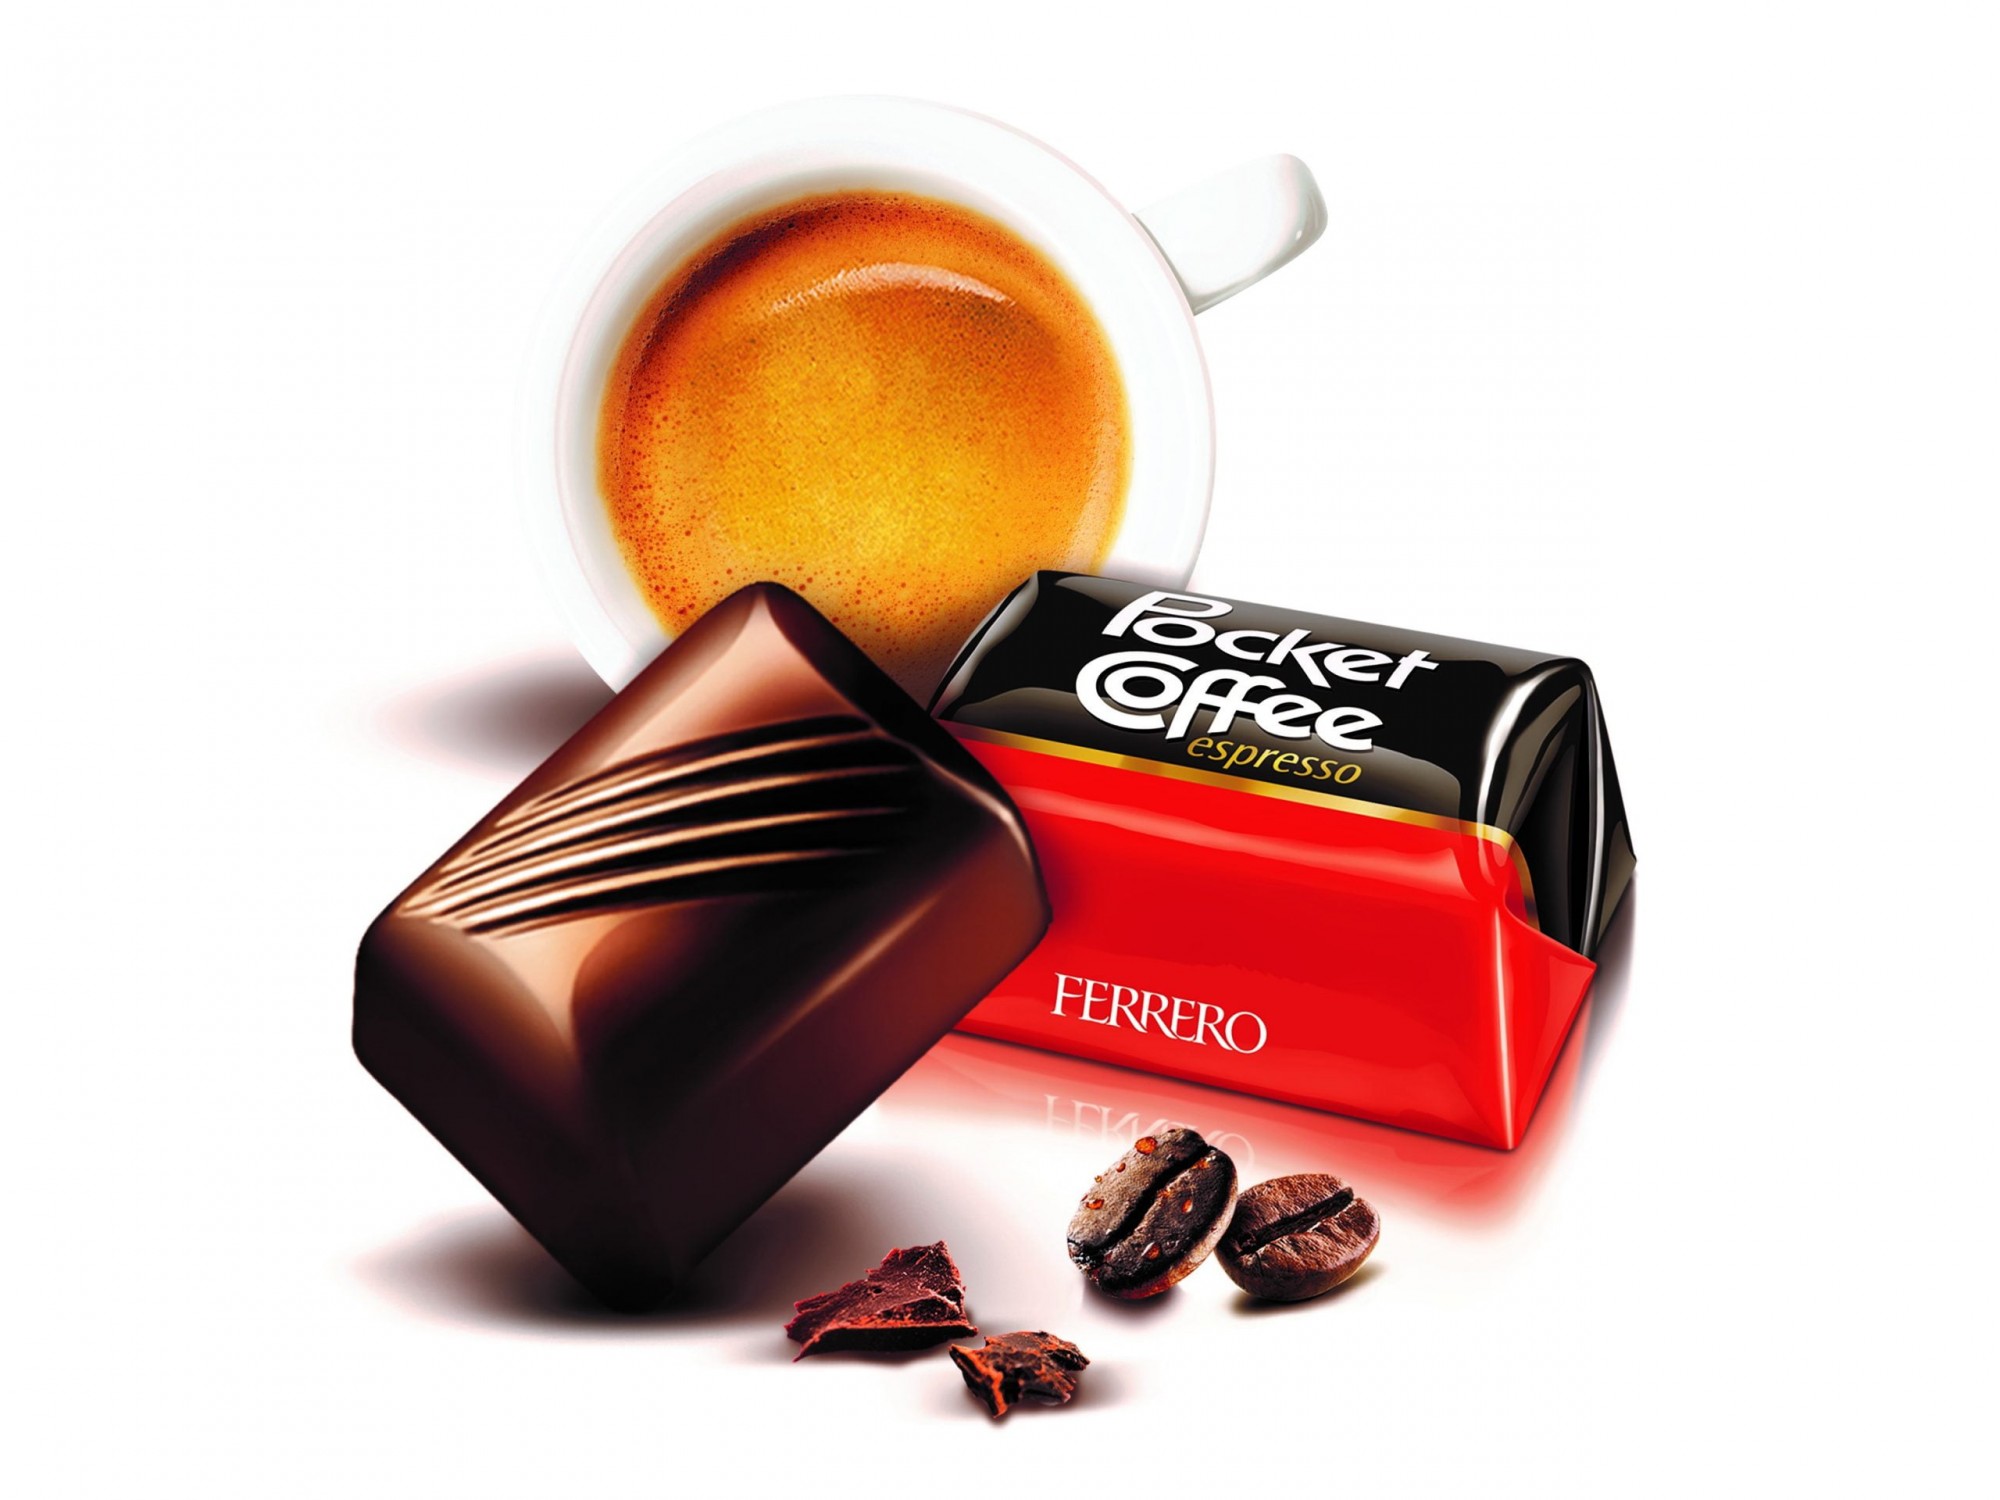 Pocket-Coffee espresso - Ferrero - 62 g